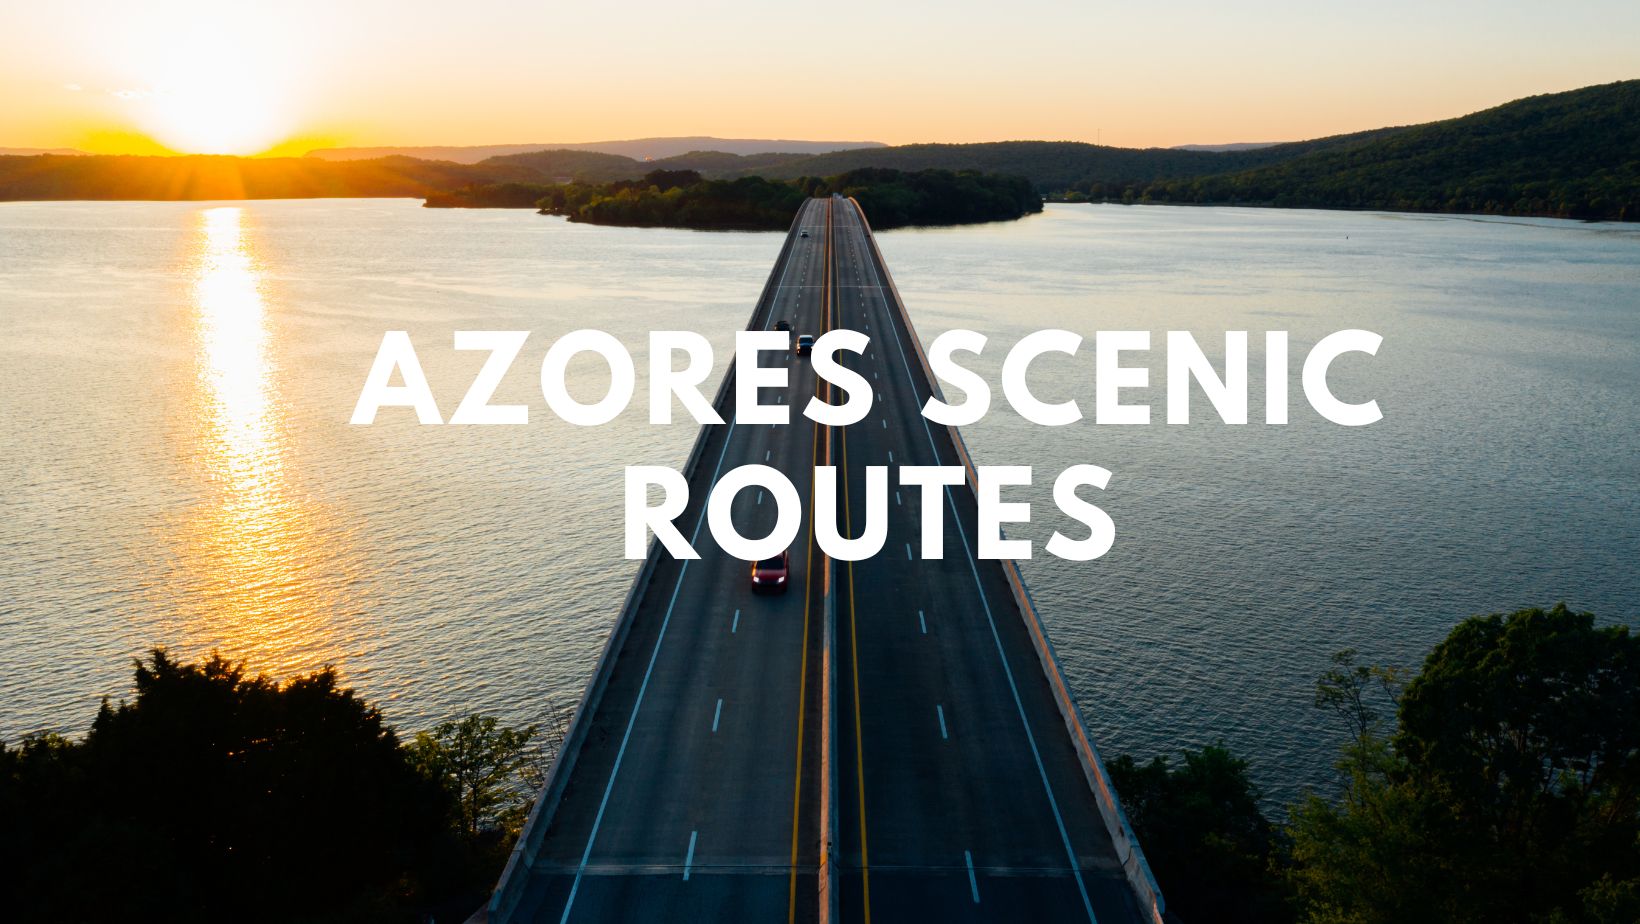 Azores scenic routes